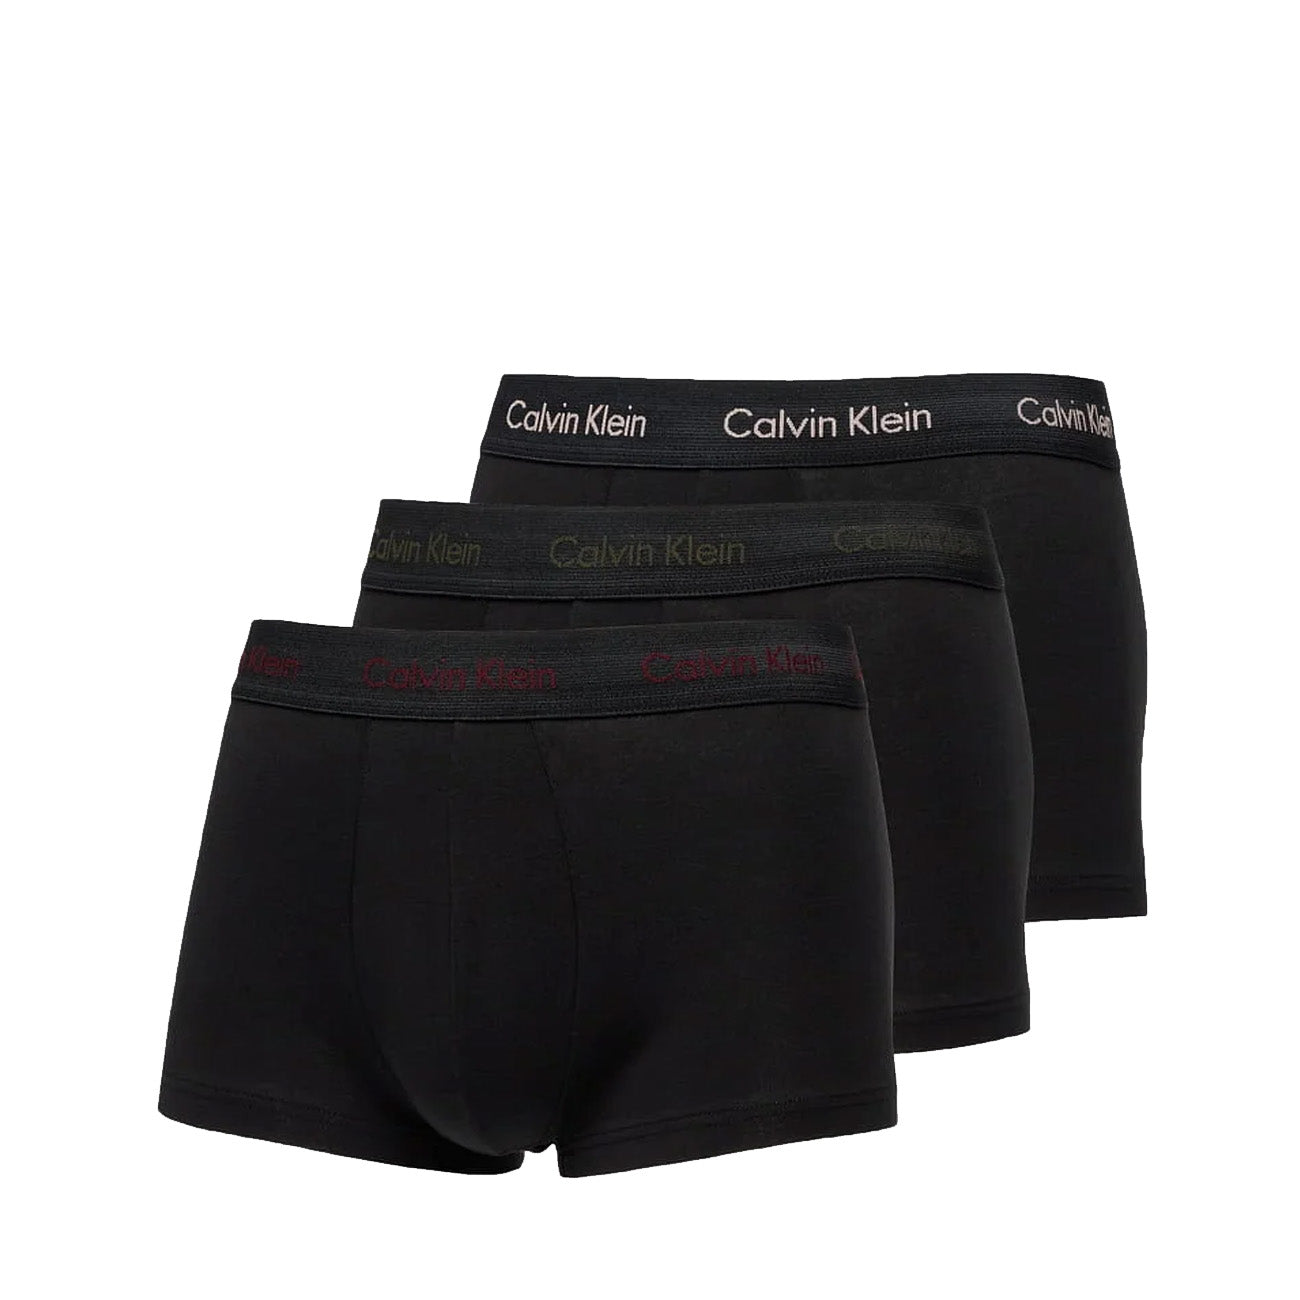 Calvin Klein 3er Pack Low Rise Trunk Cotton Stretch Boxershorts B-White Twny Port Porpoise Logos